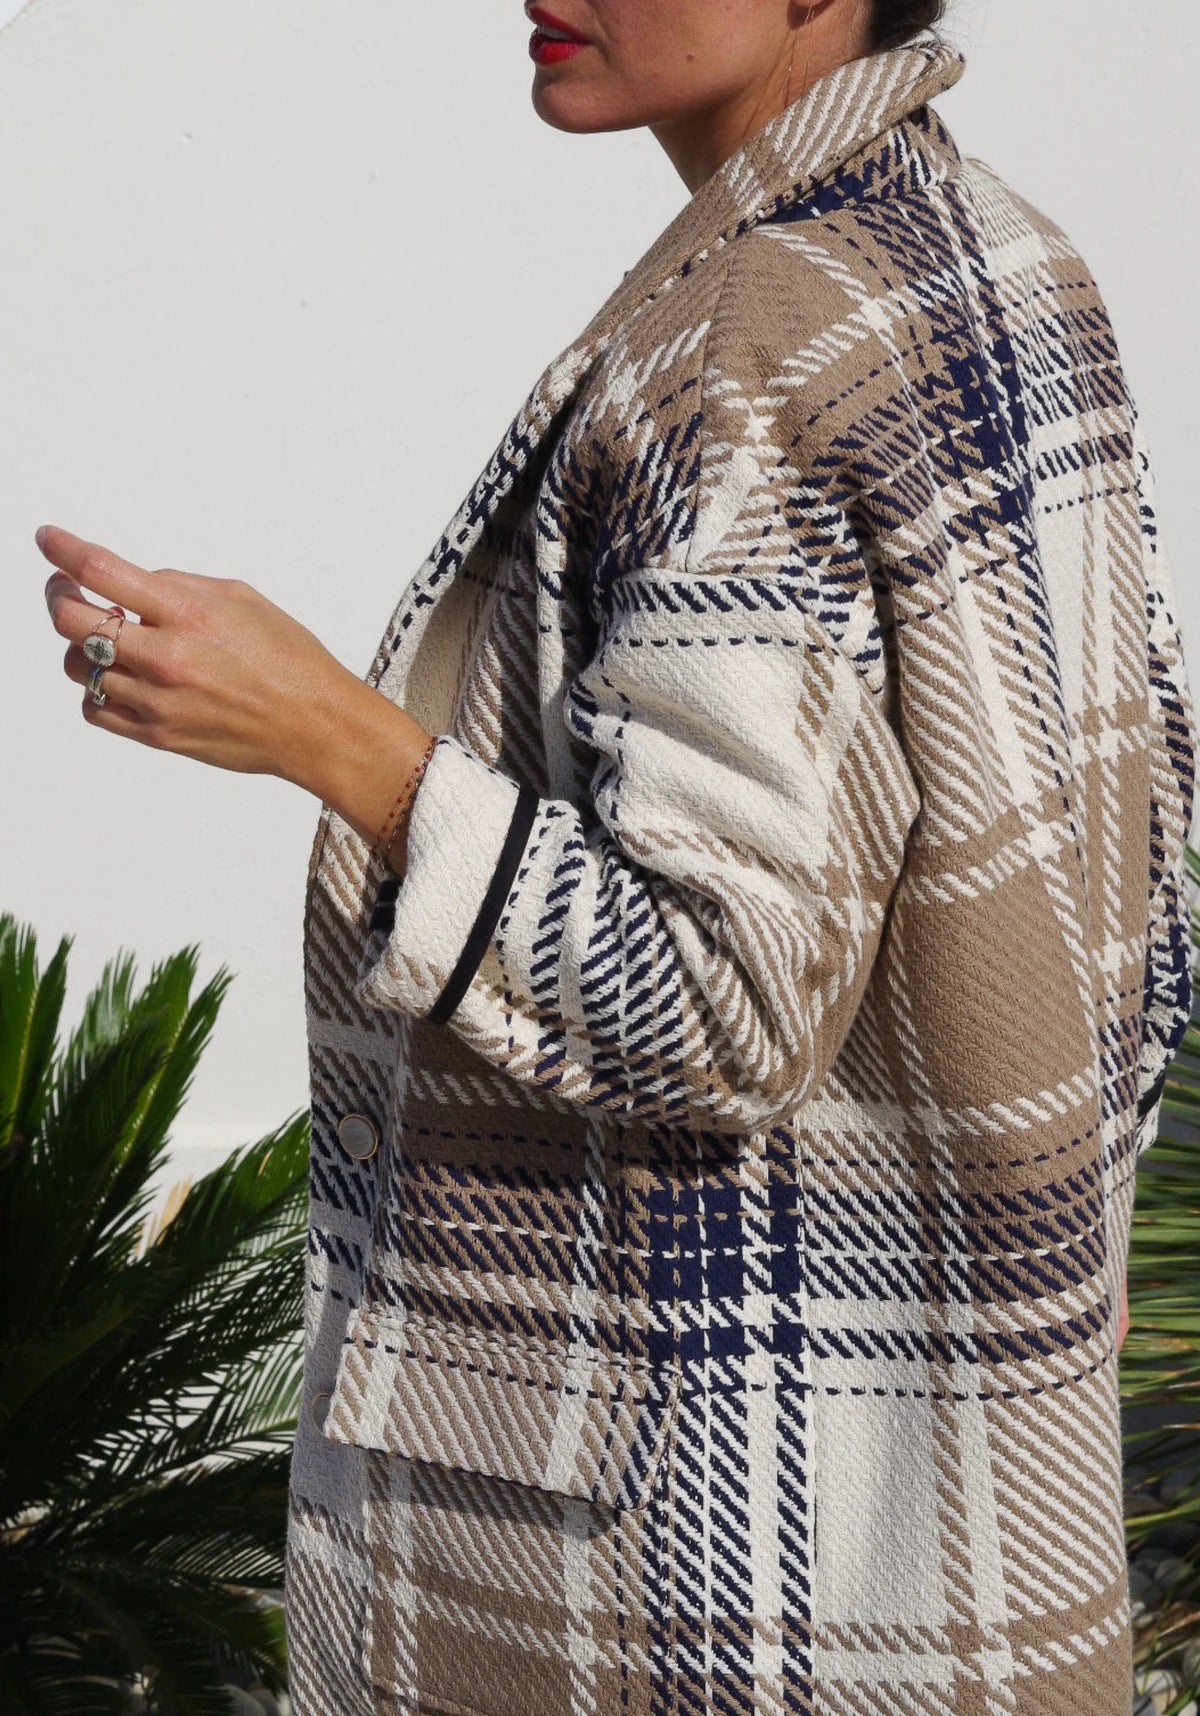 Maison Fauve - Pam Coat Sewing Pattern